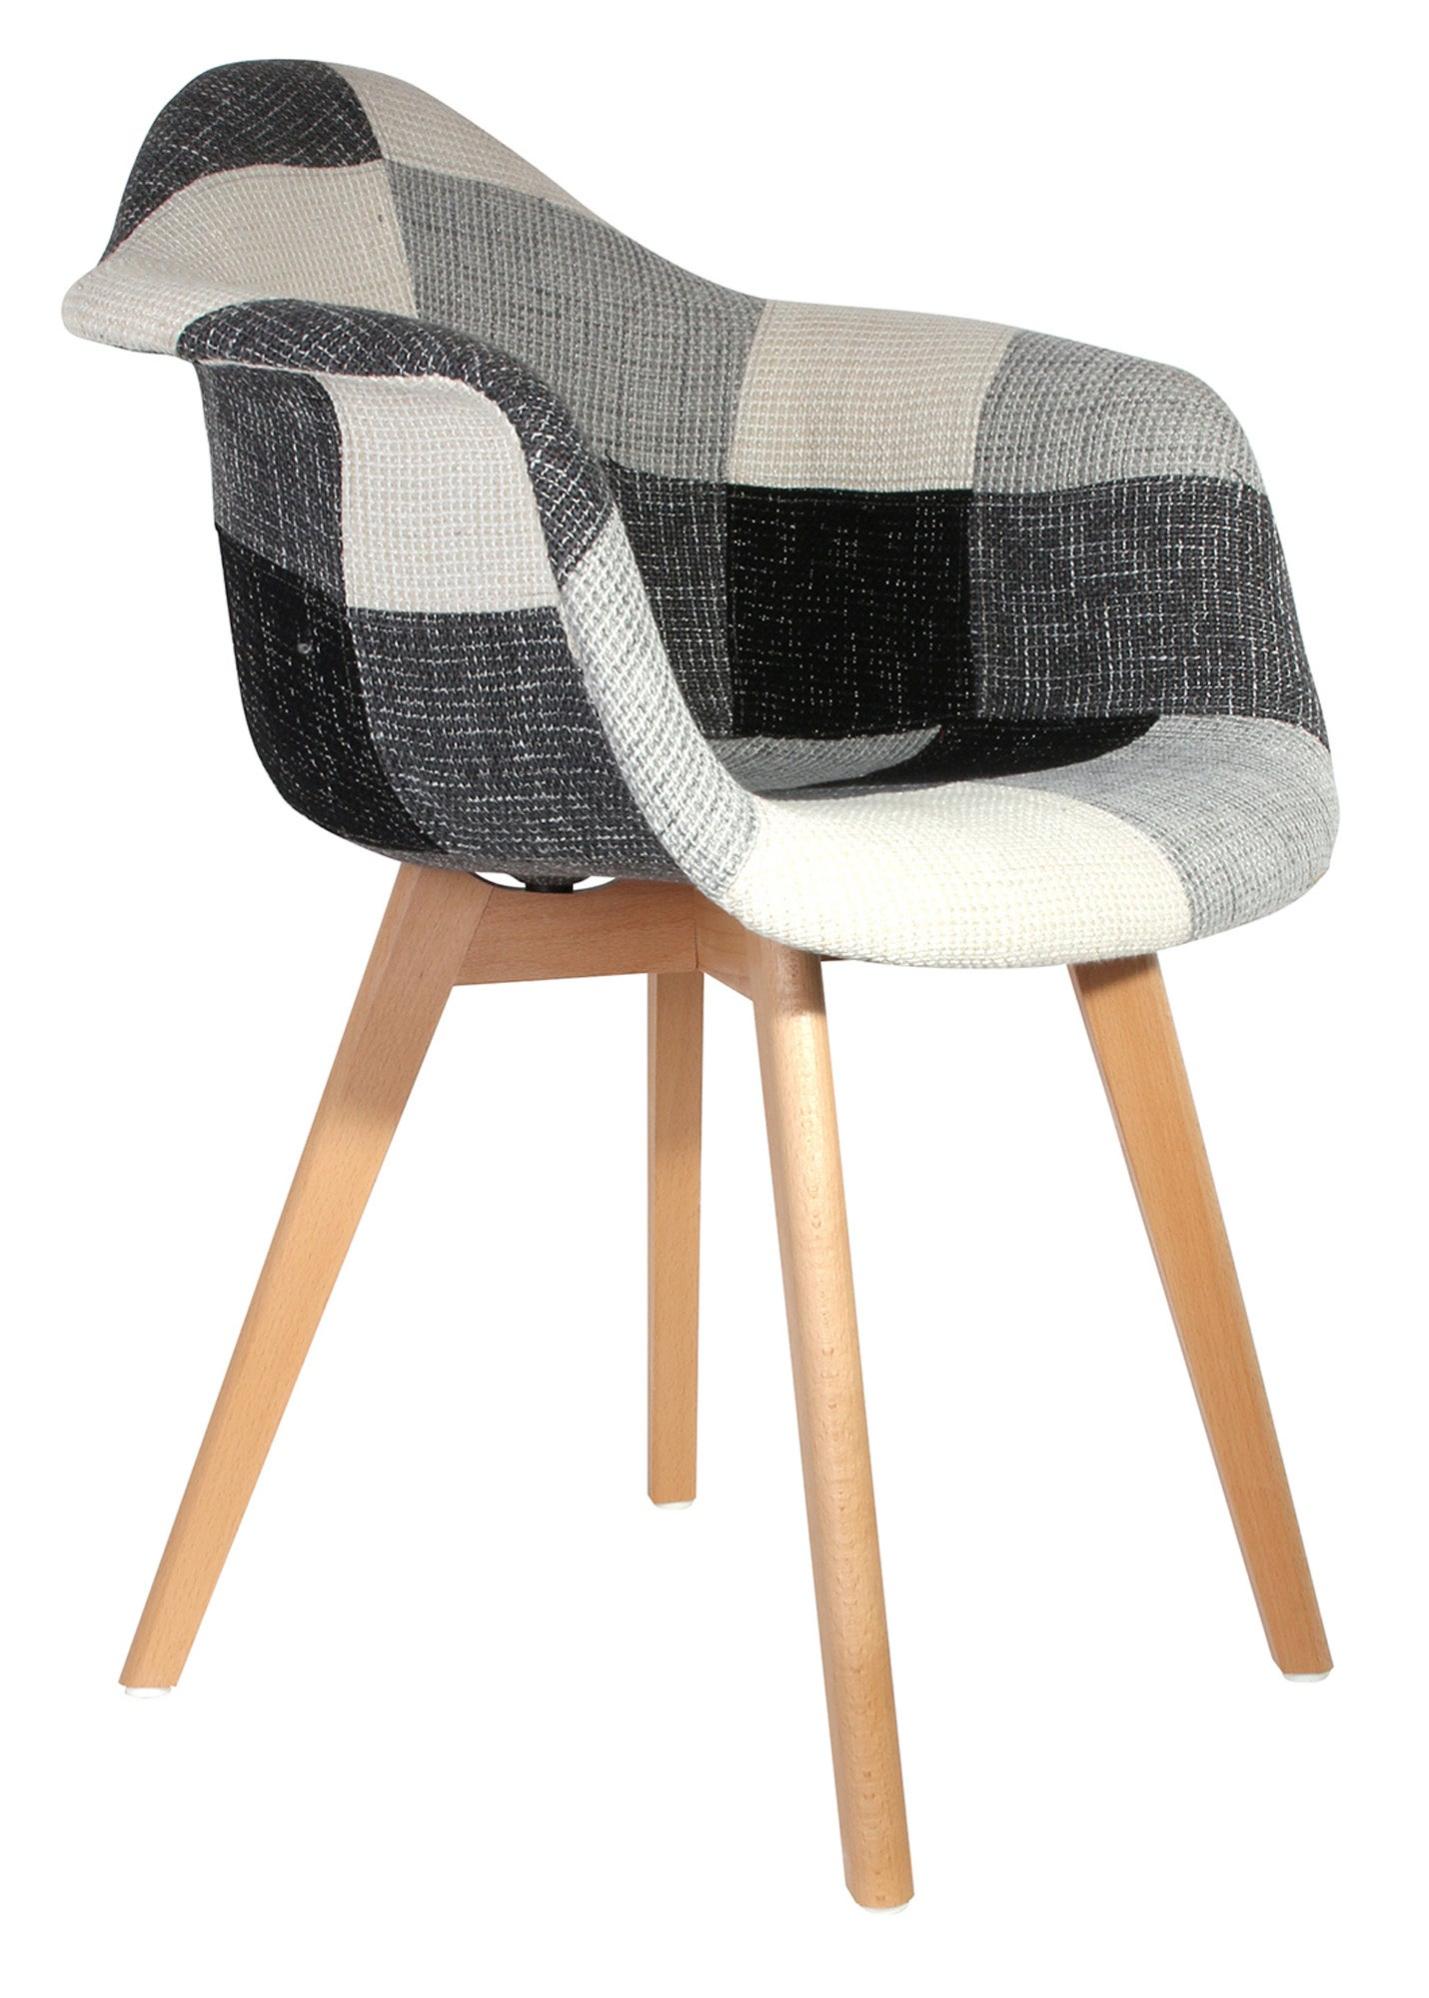 Set de 2 sillas de comedor scandin de madera color gris de 83,5x60,5x62cm